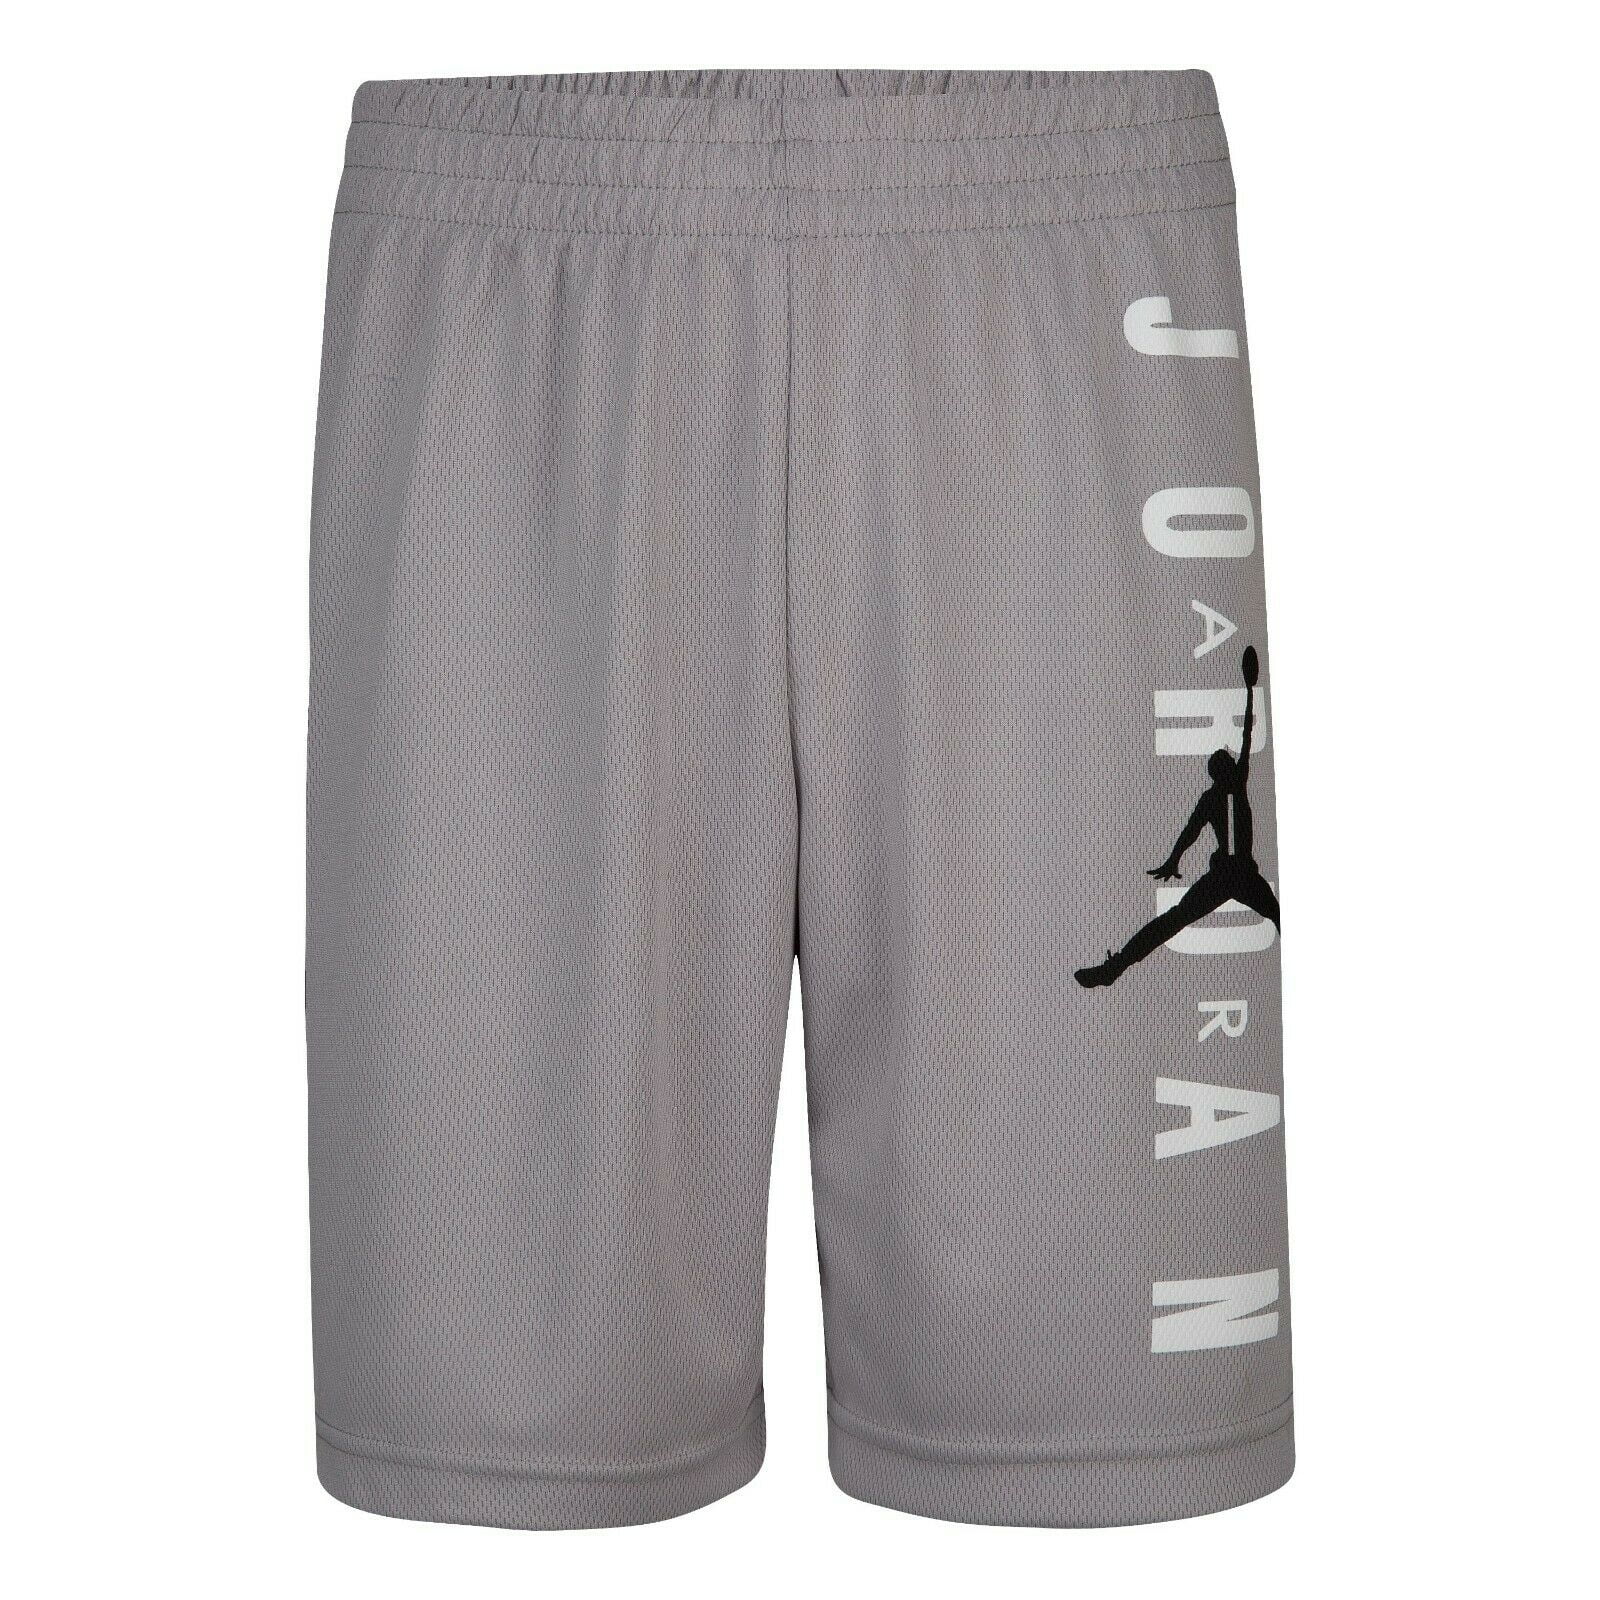 Nike Air Jordan Boys' Mesh Gray Basketball Shorts Size L - Walmart.com